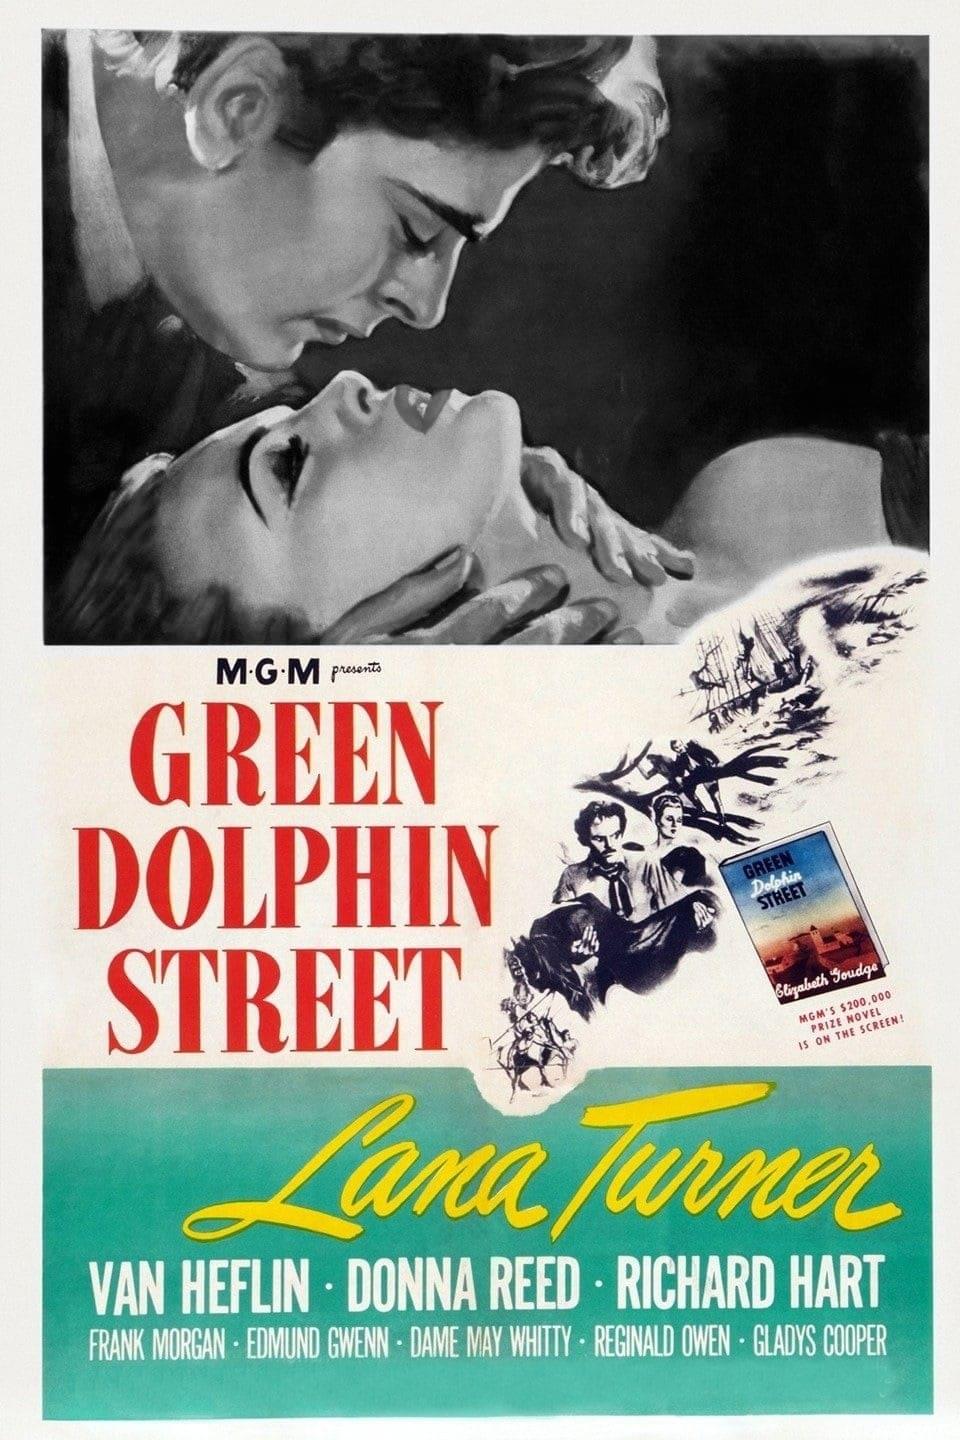 Green Dolphin Street poster